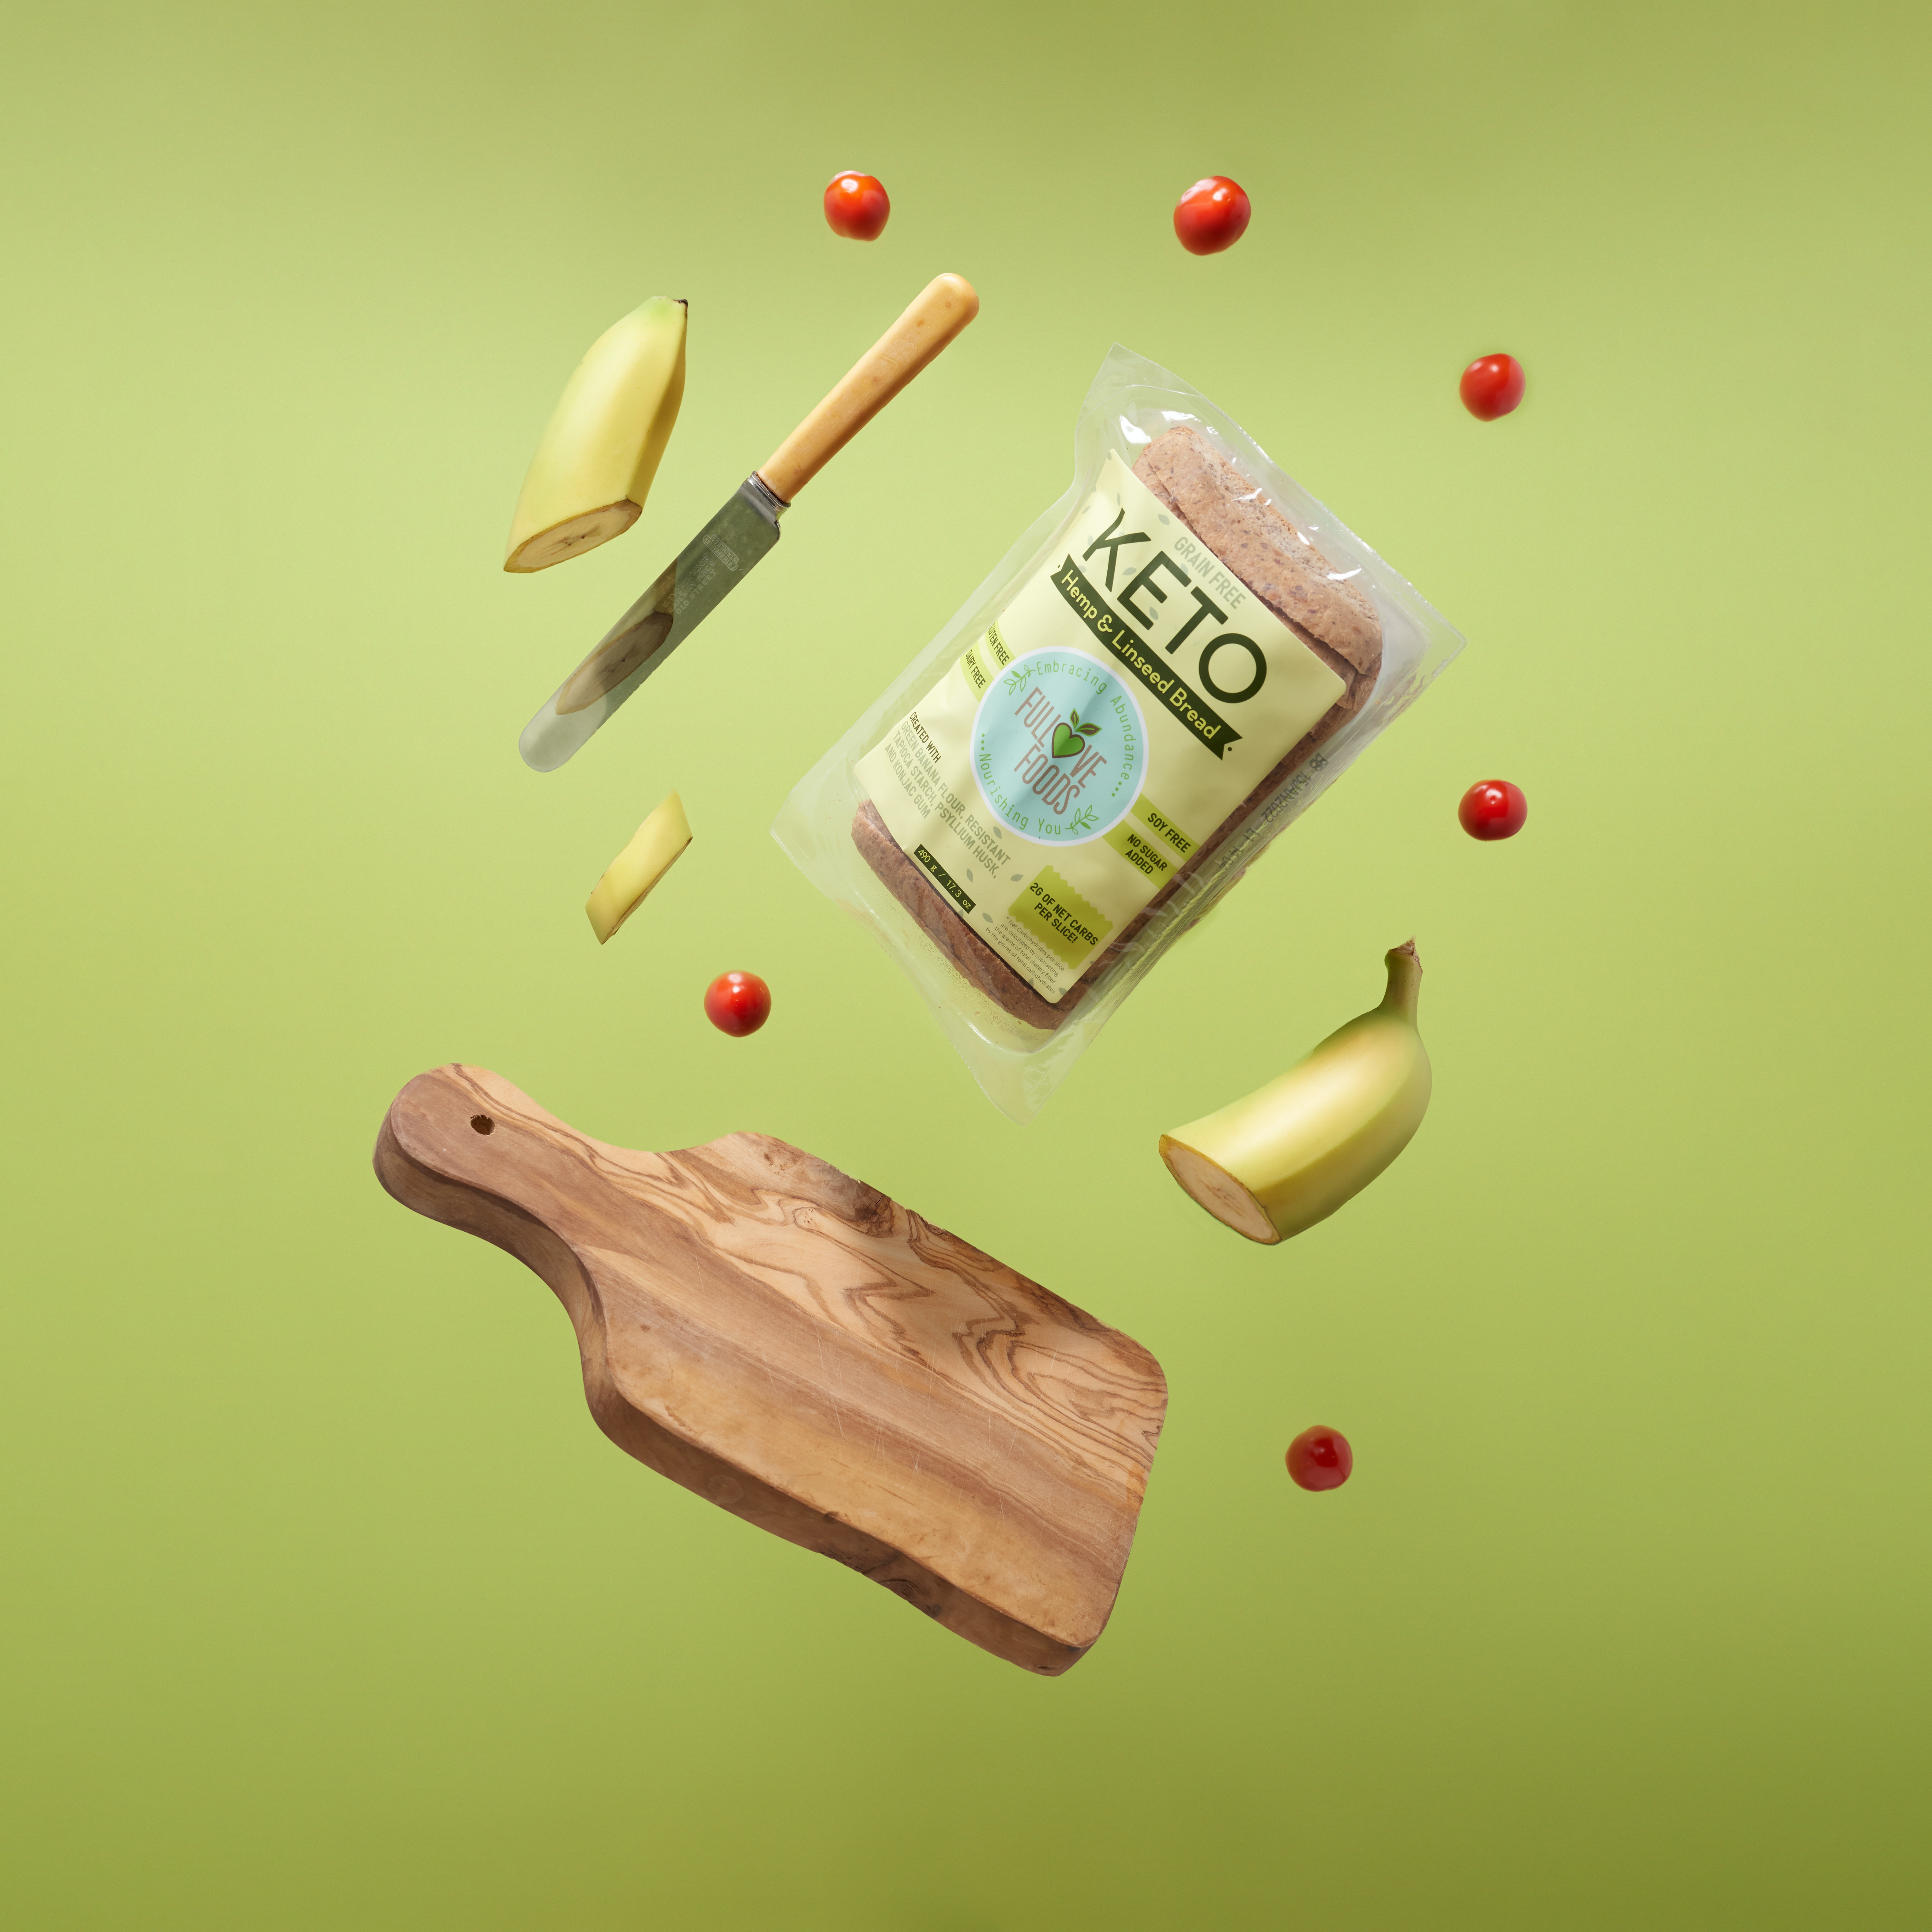 An image of a chopping board, knife, half-cut banana, and keto bread brand